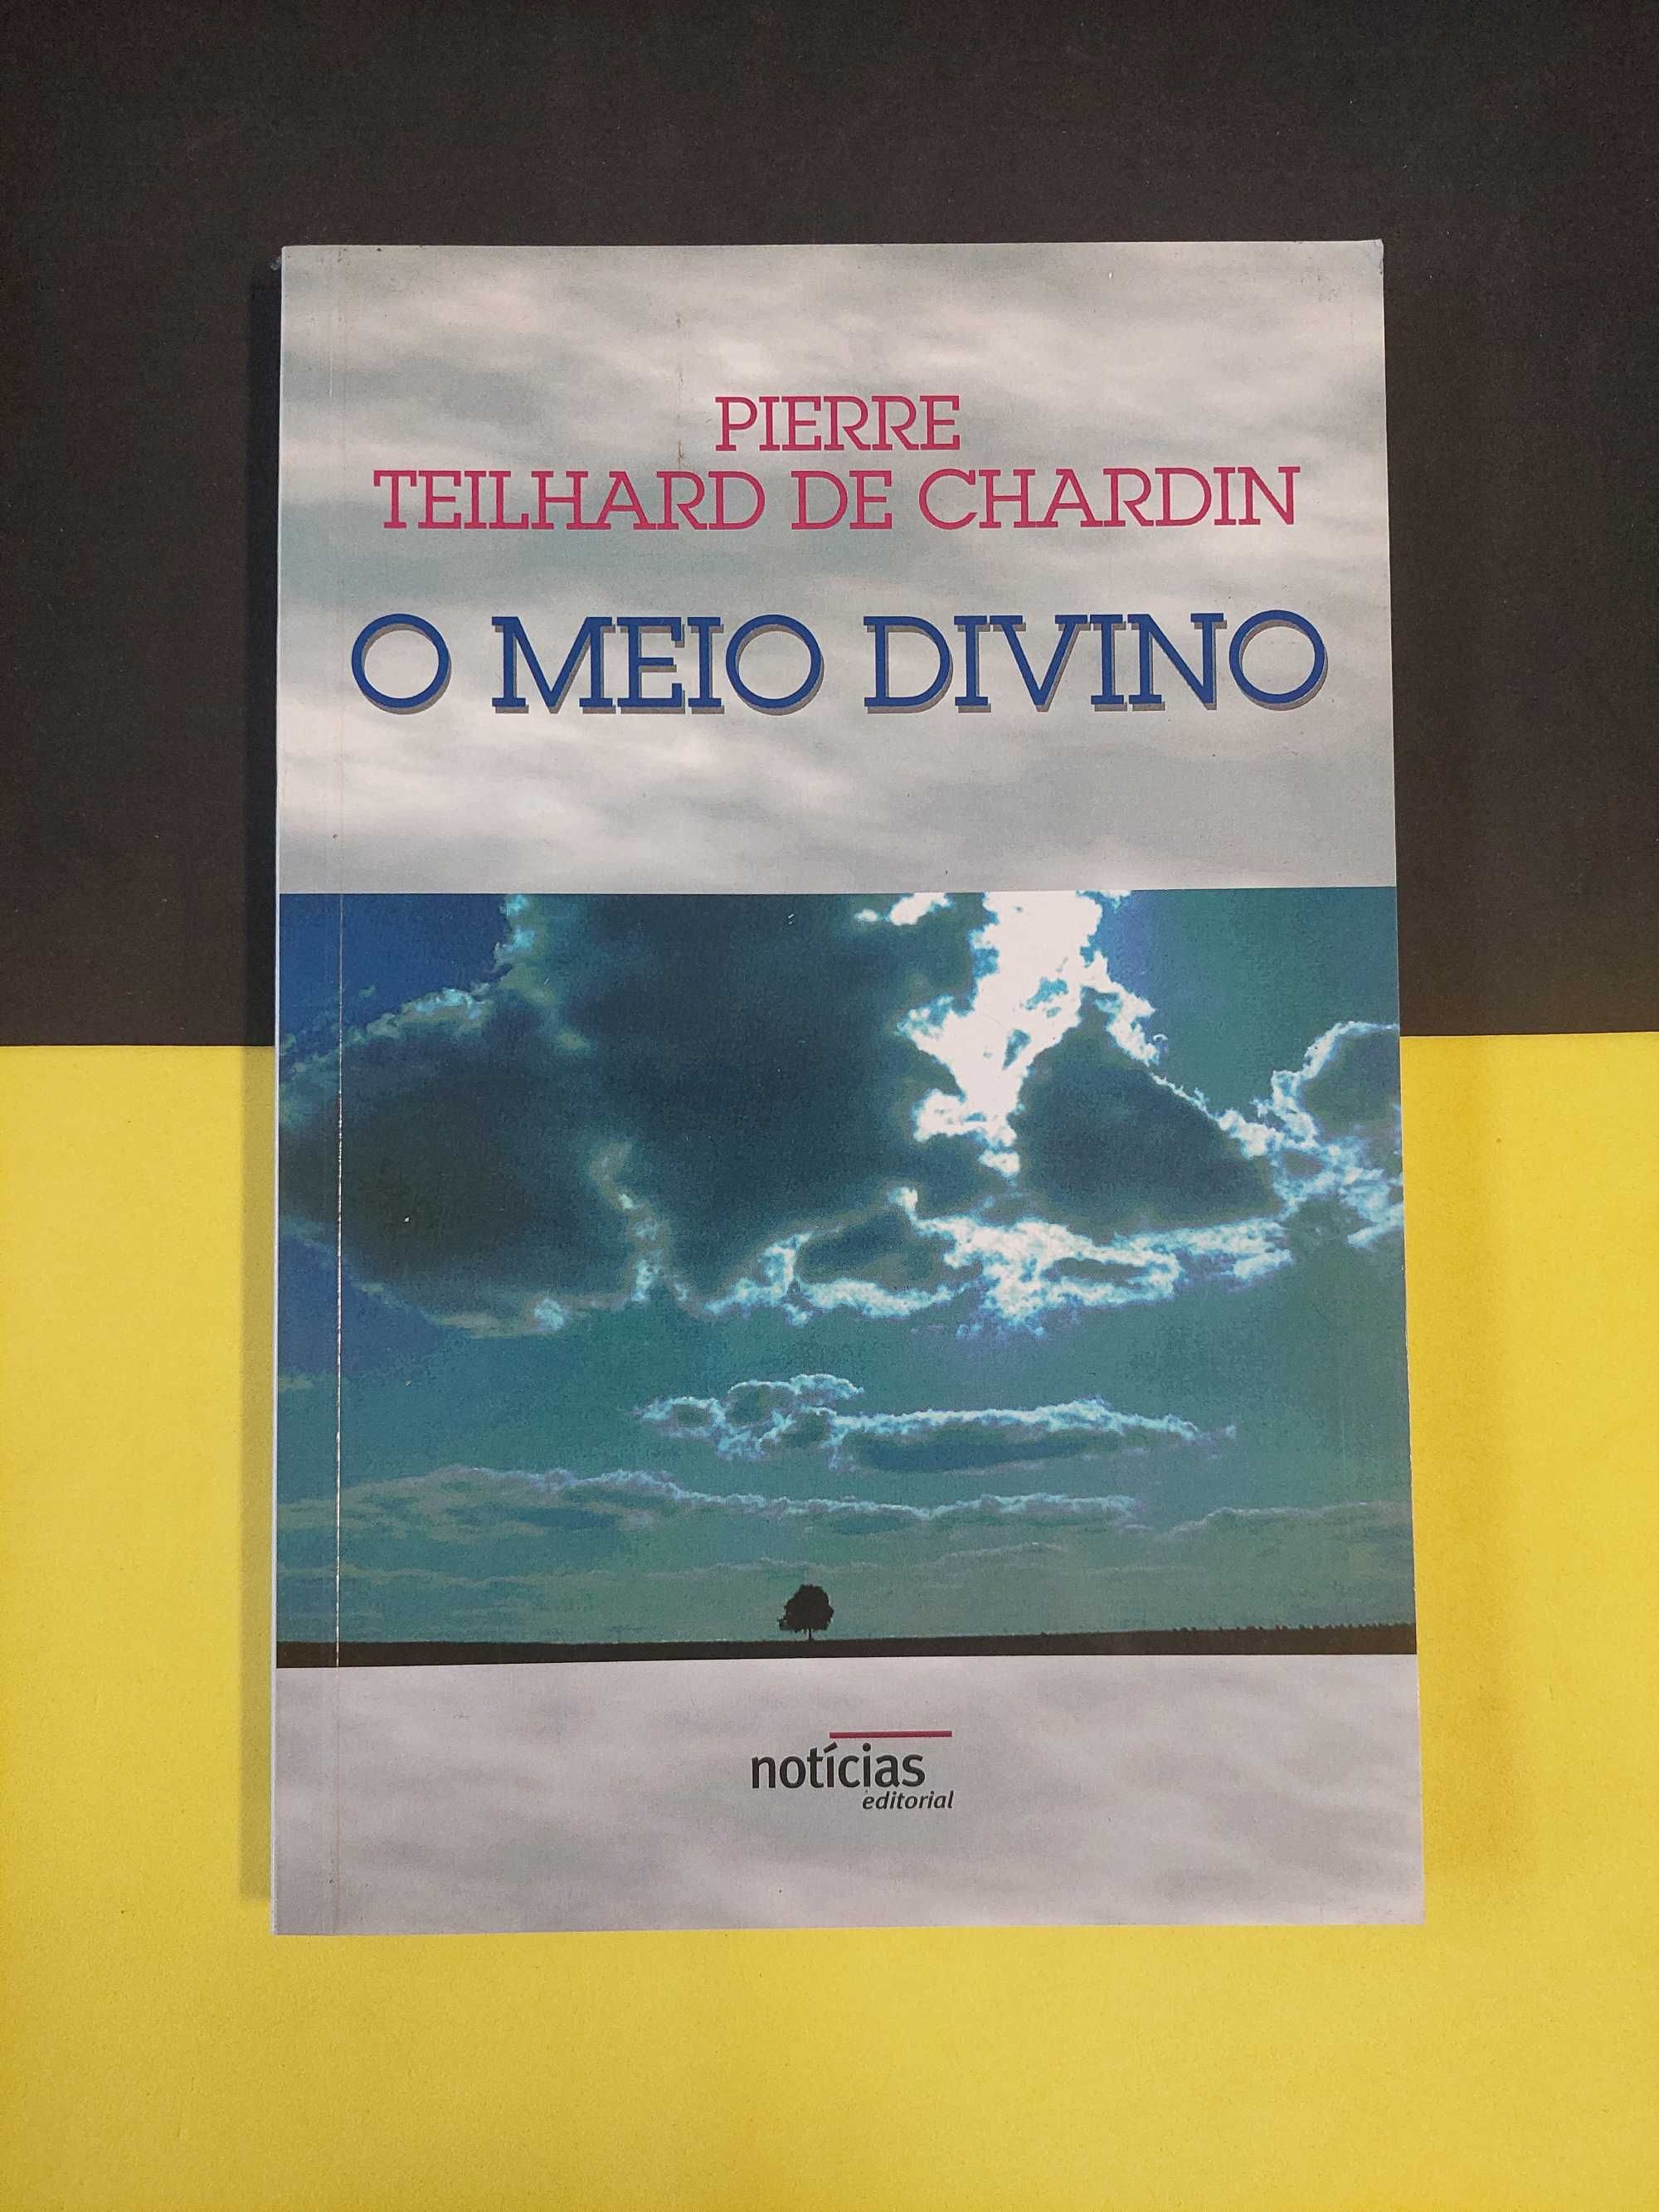 Pierre Teilhard de Chardin - O meio divino